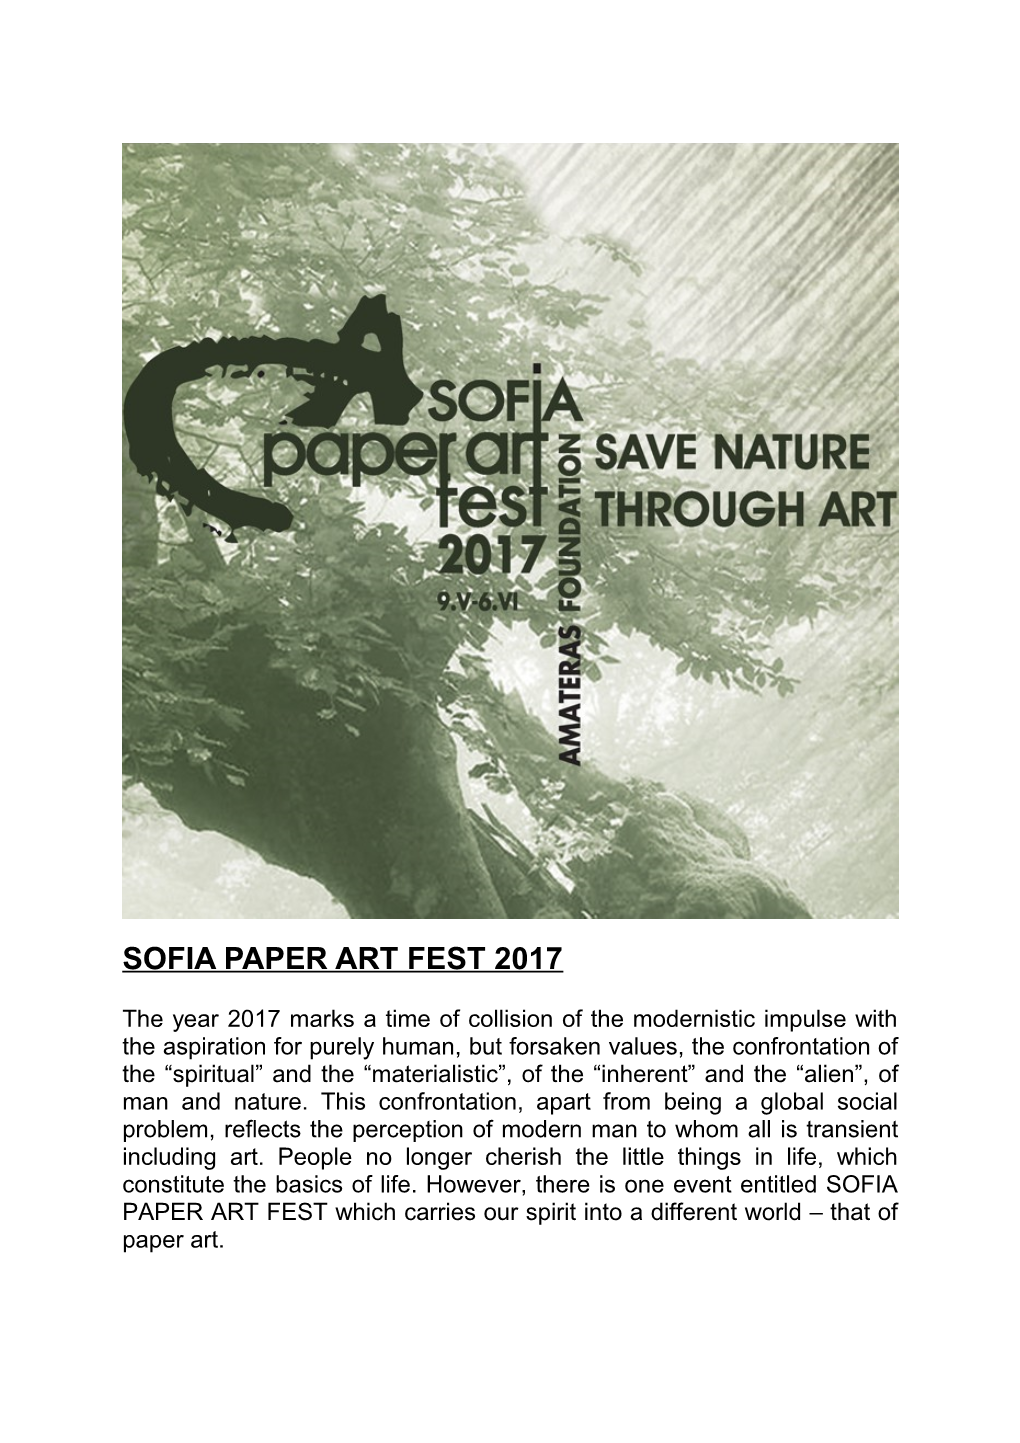 Sofia Paper Art Fest 2017